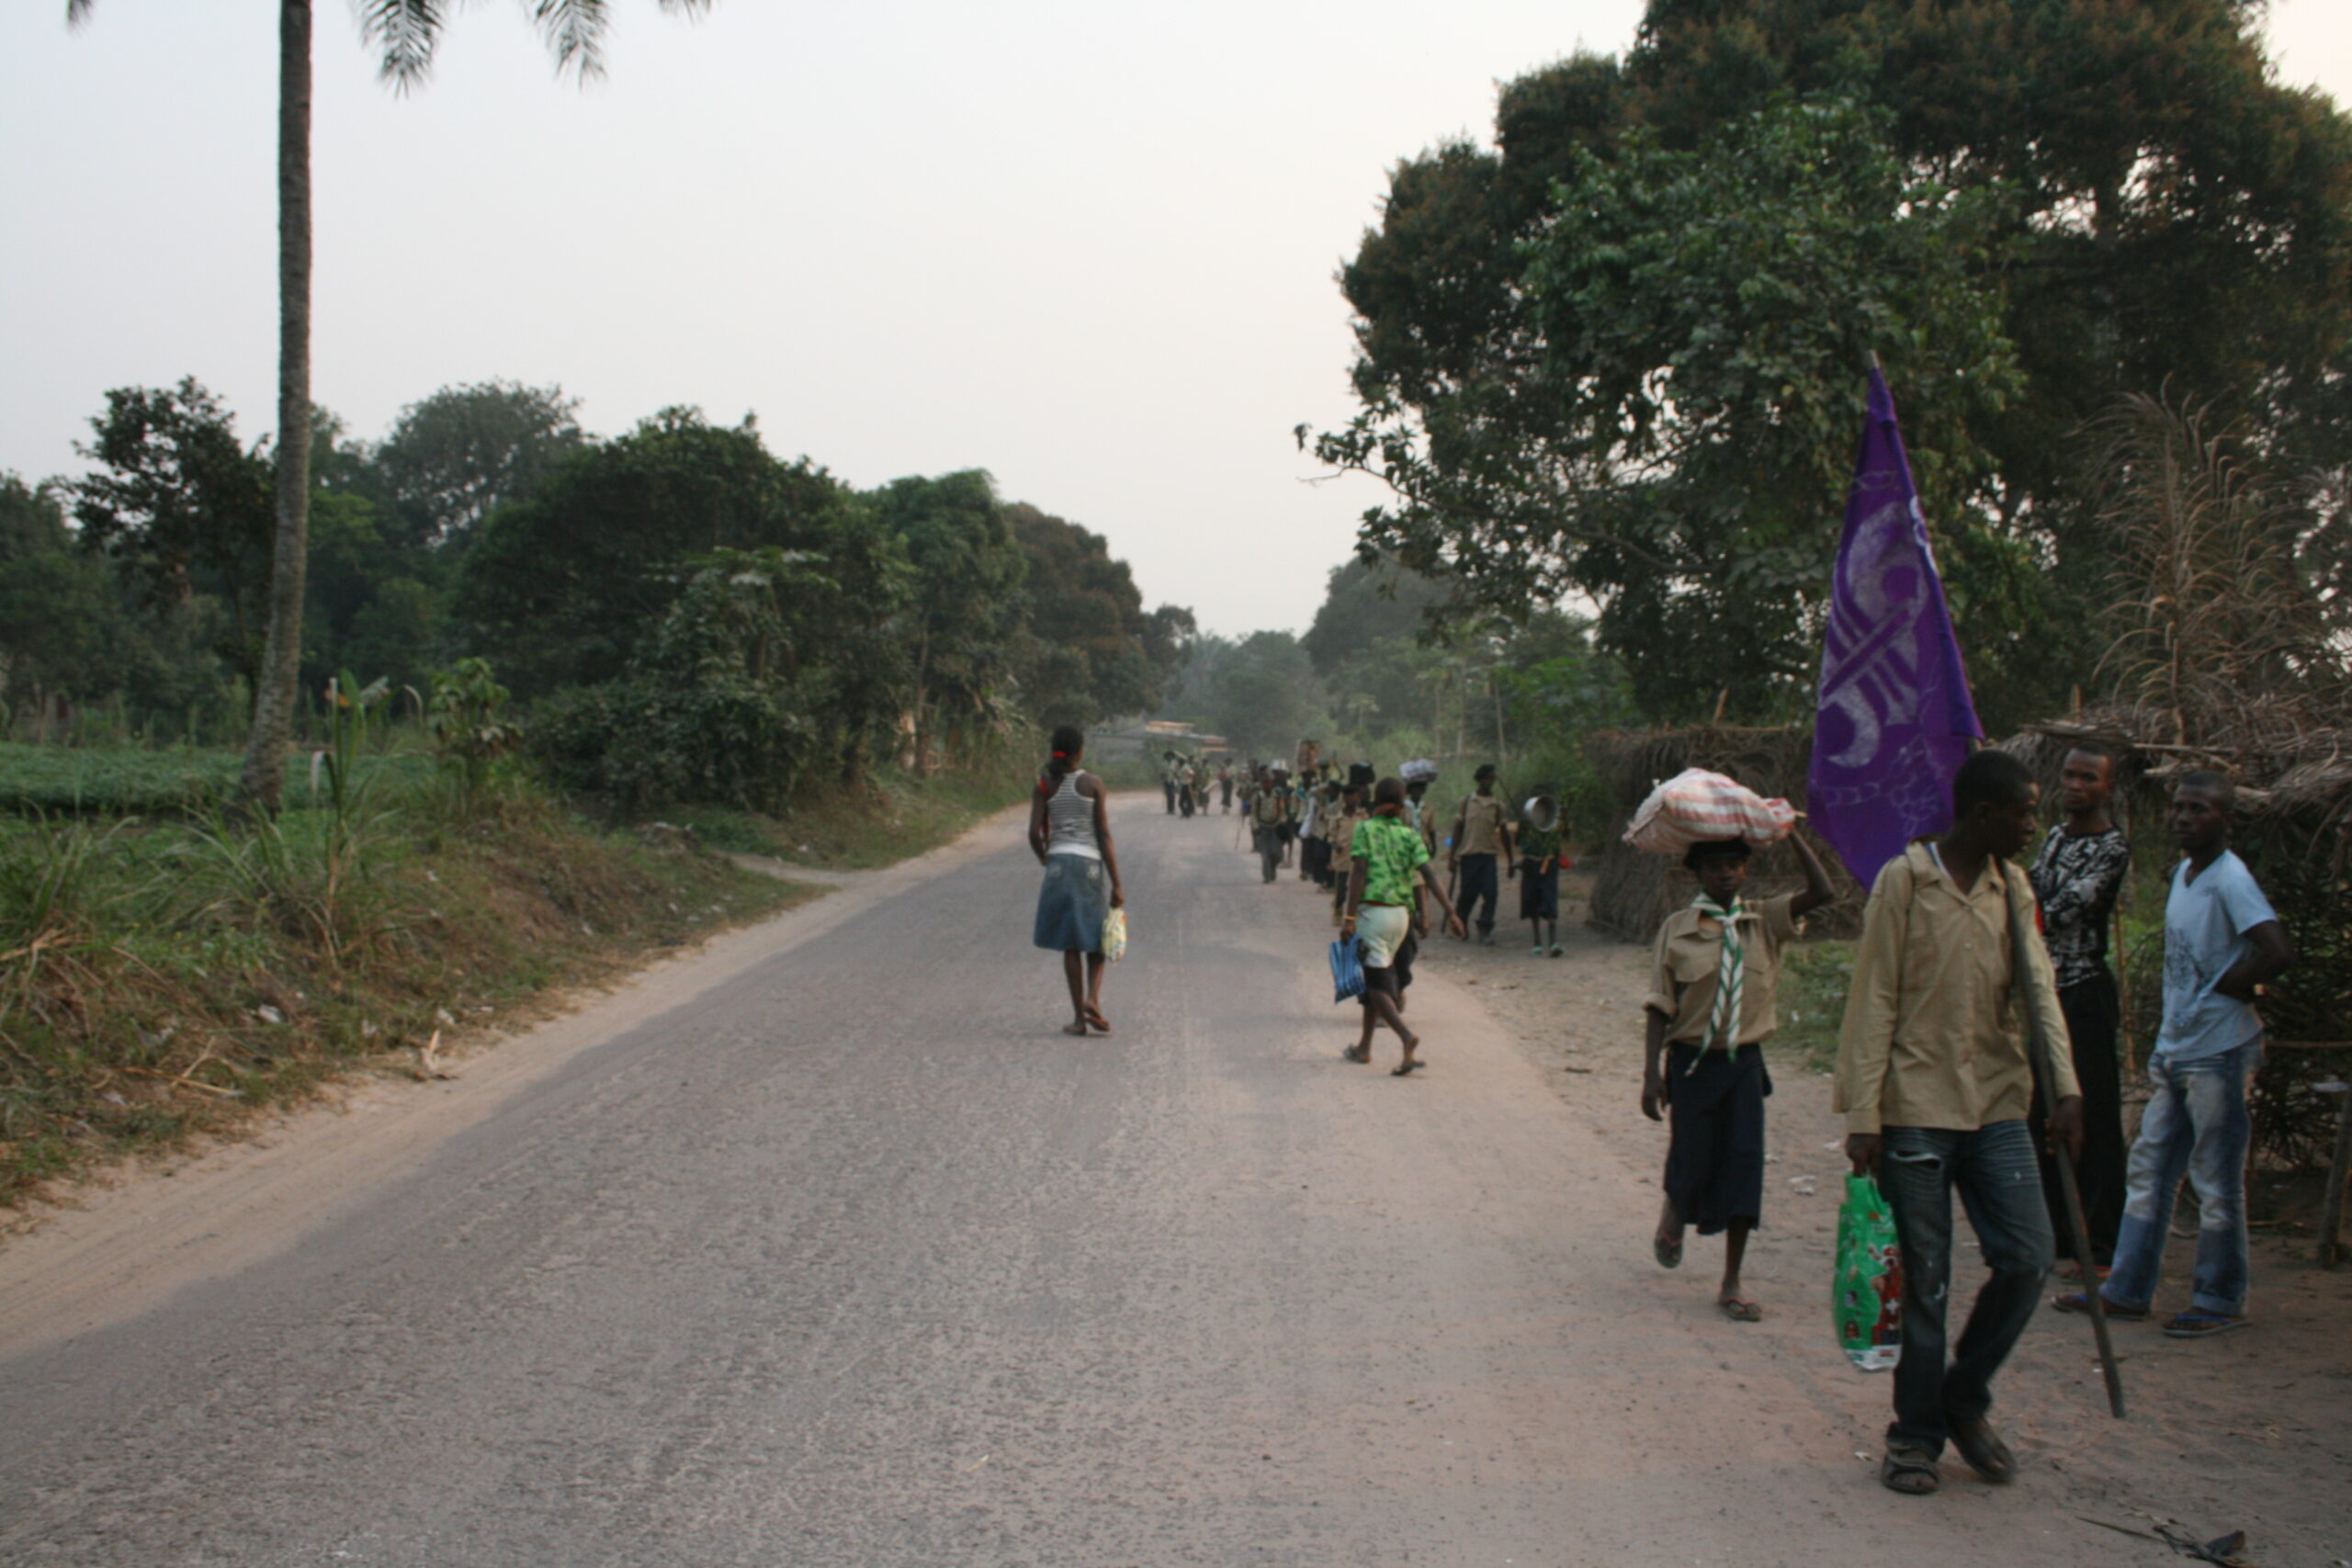 Boy Scout troup in Kinshasa